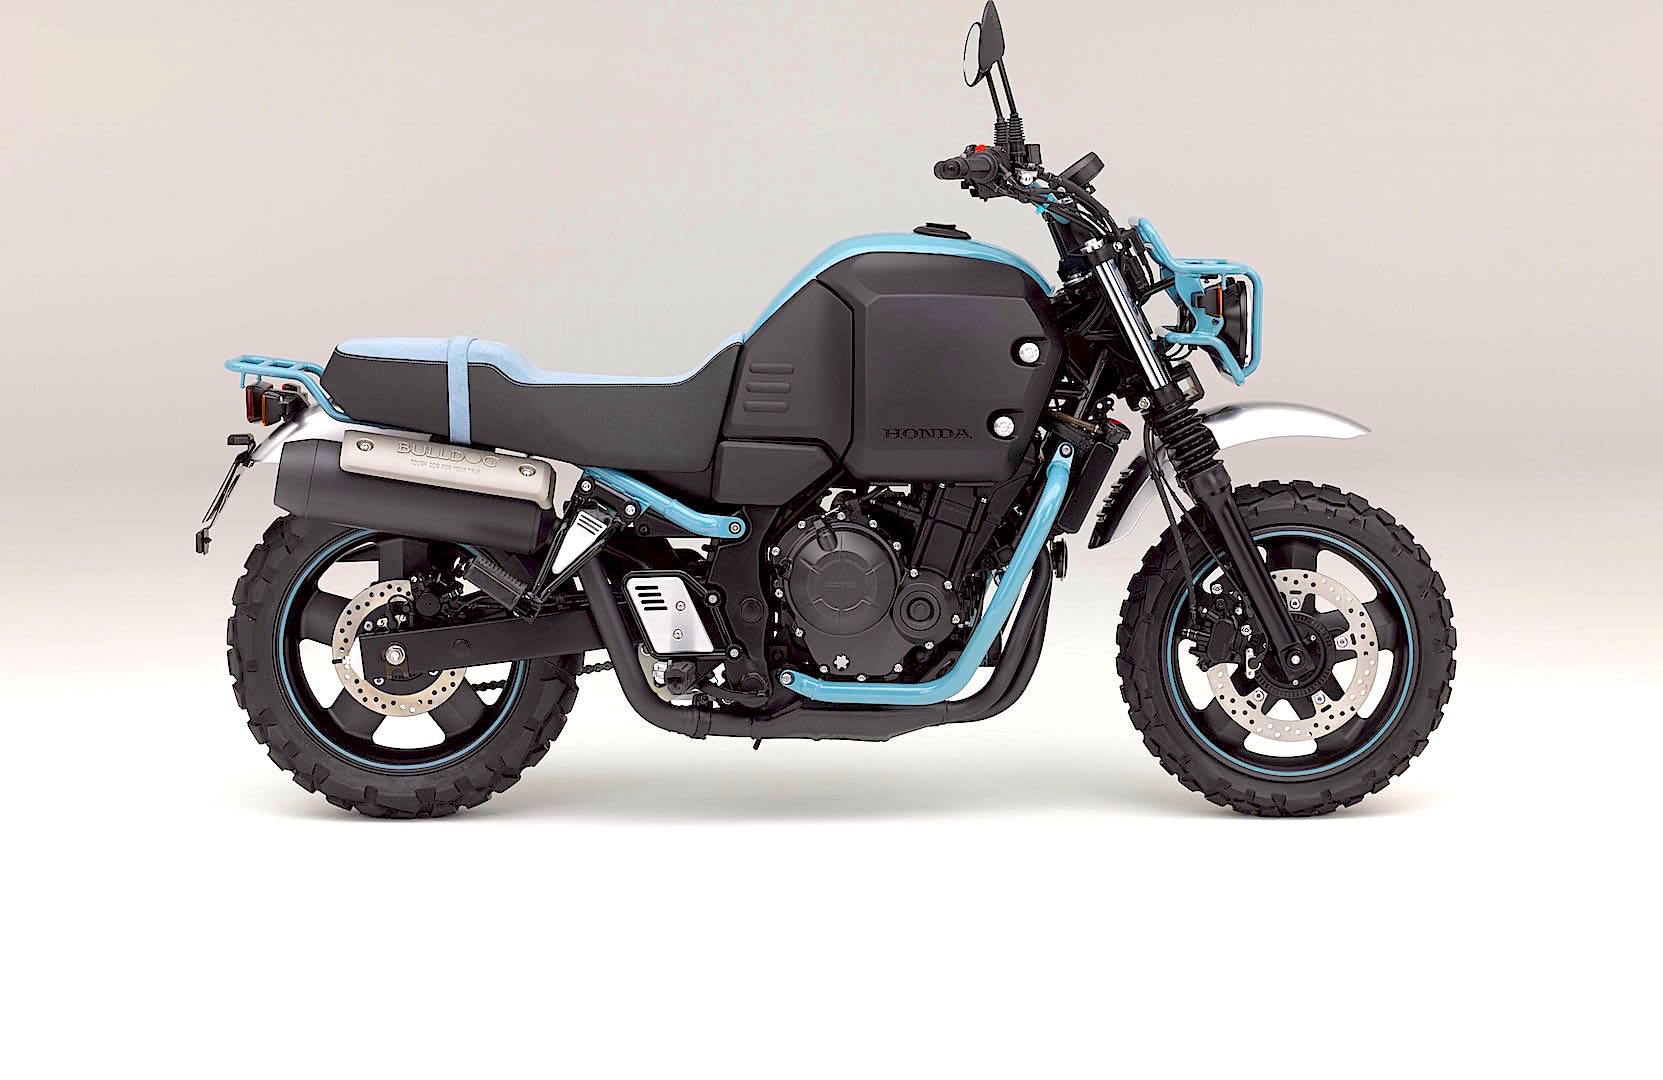 Honda 2021: the new motorcycle models of the Japanese company - Vulturbike